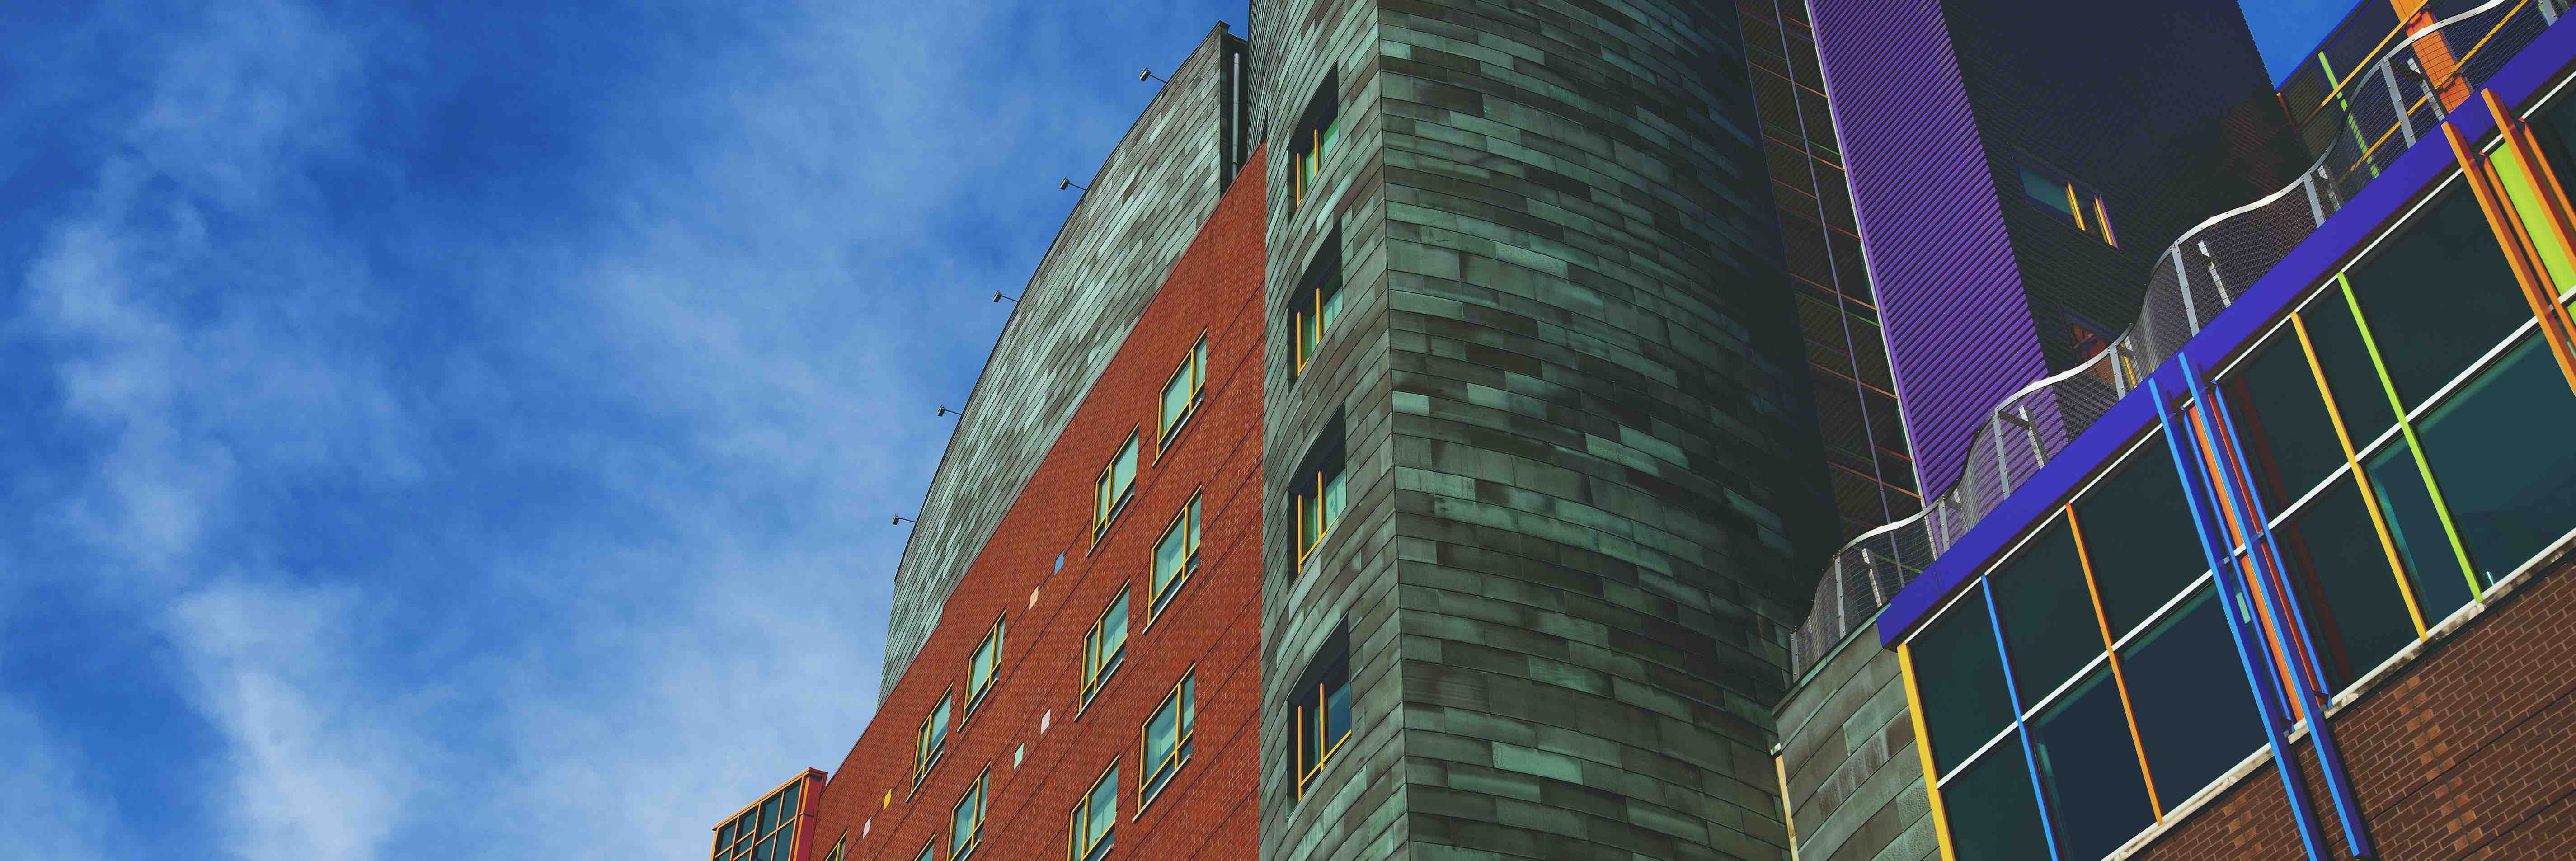 UPMC Children's Hospital of Pittsburgh exterior